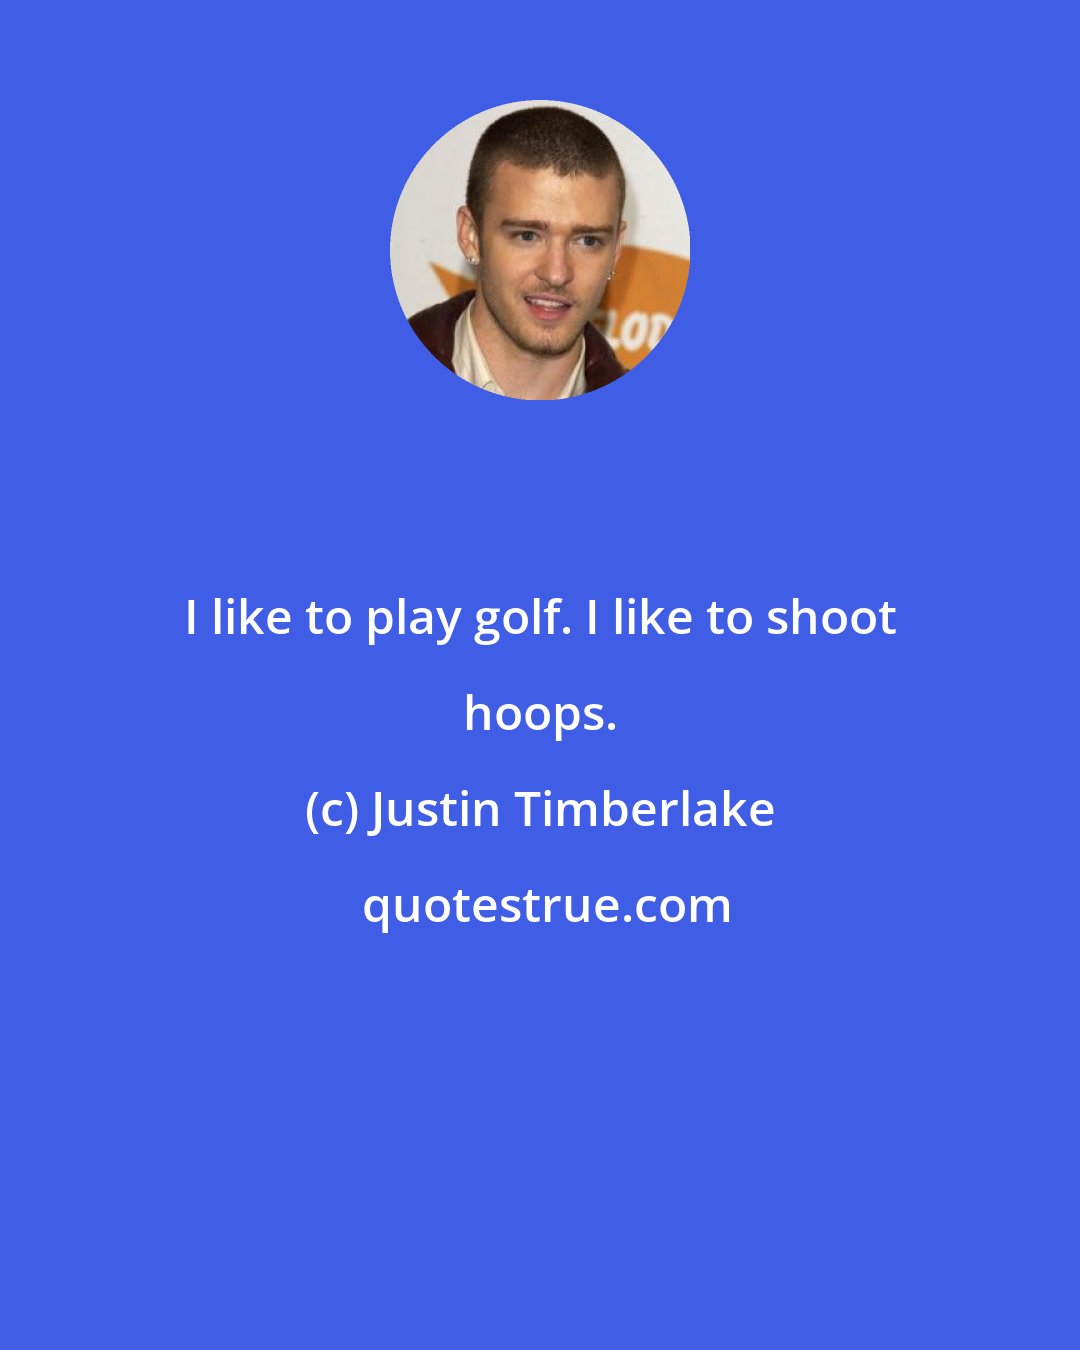 Justin Timberlake: I like to play golf. I like to shoot hoops.